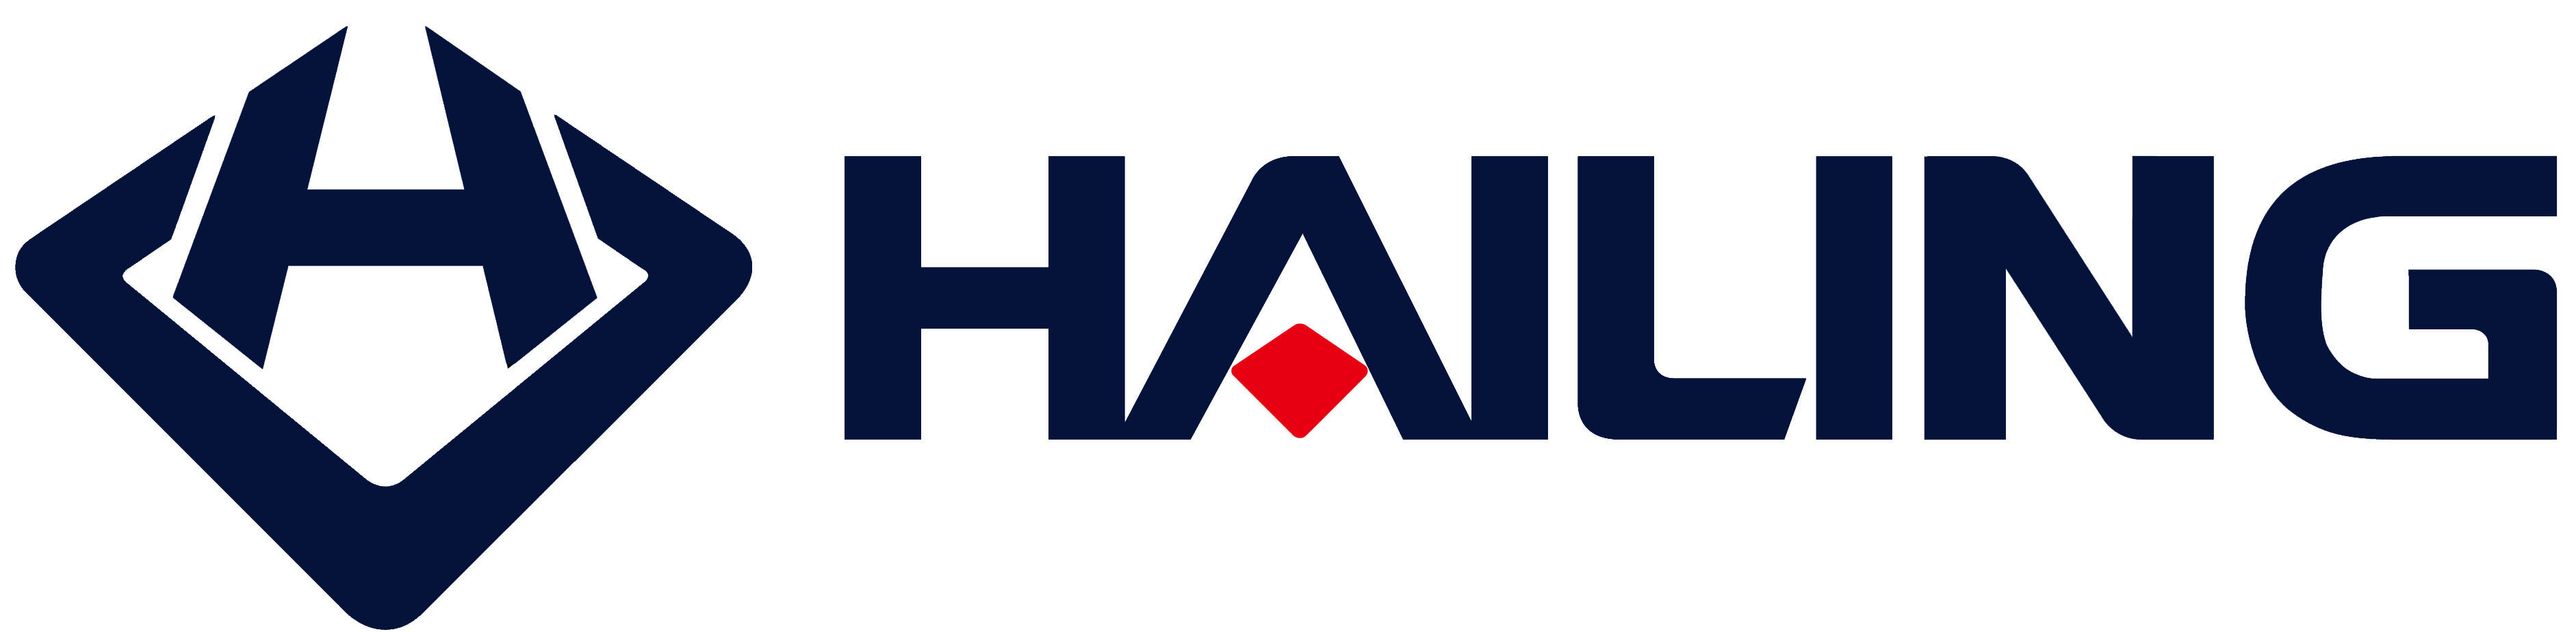 Haimen Hailing Carbon Industry Co.,Ltd